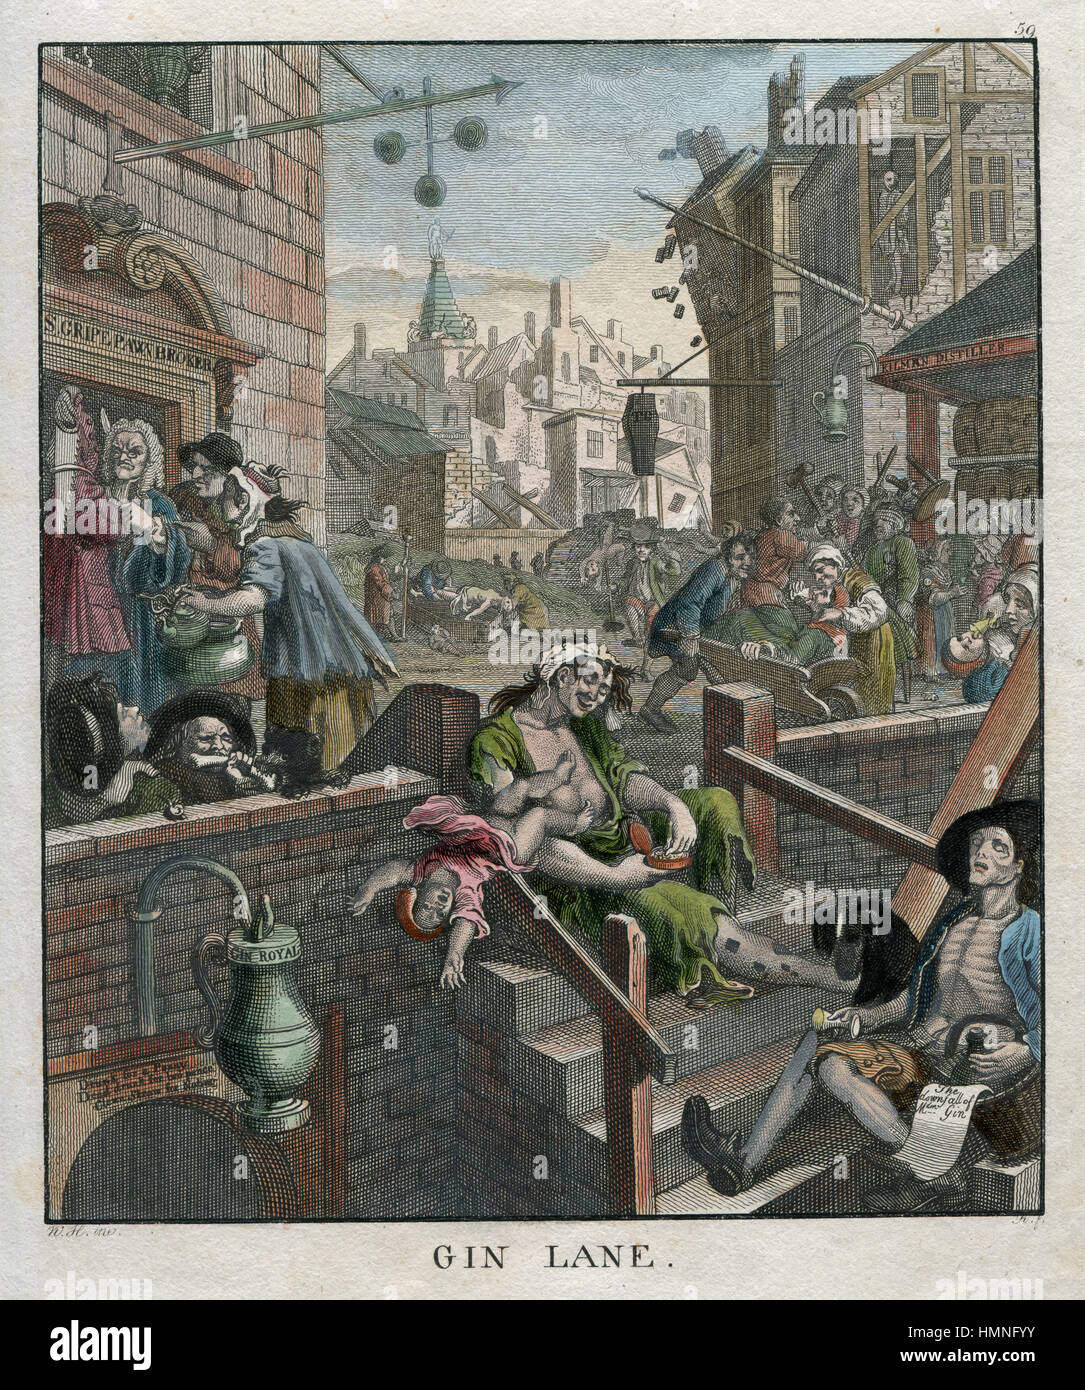 L'alcool ville royale - Gin Gin Lane par William Hogarth, 1751 Banque D'Images